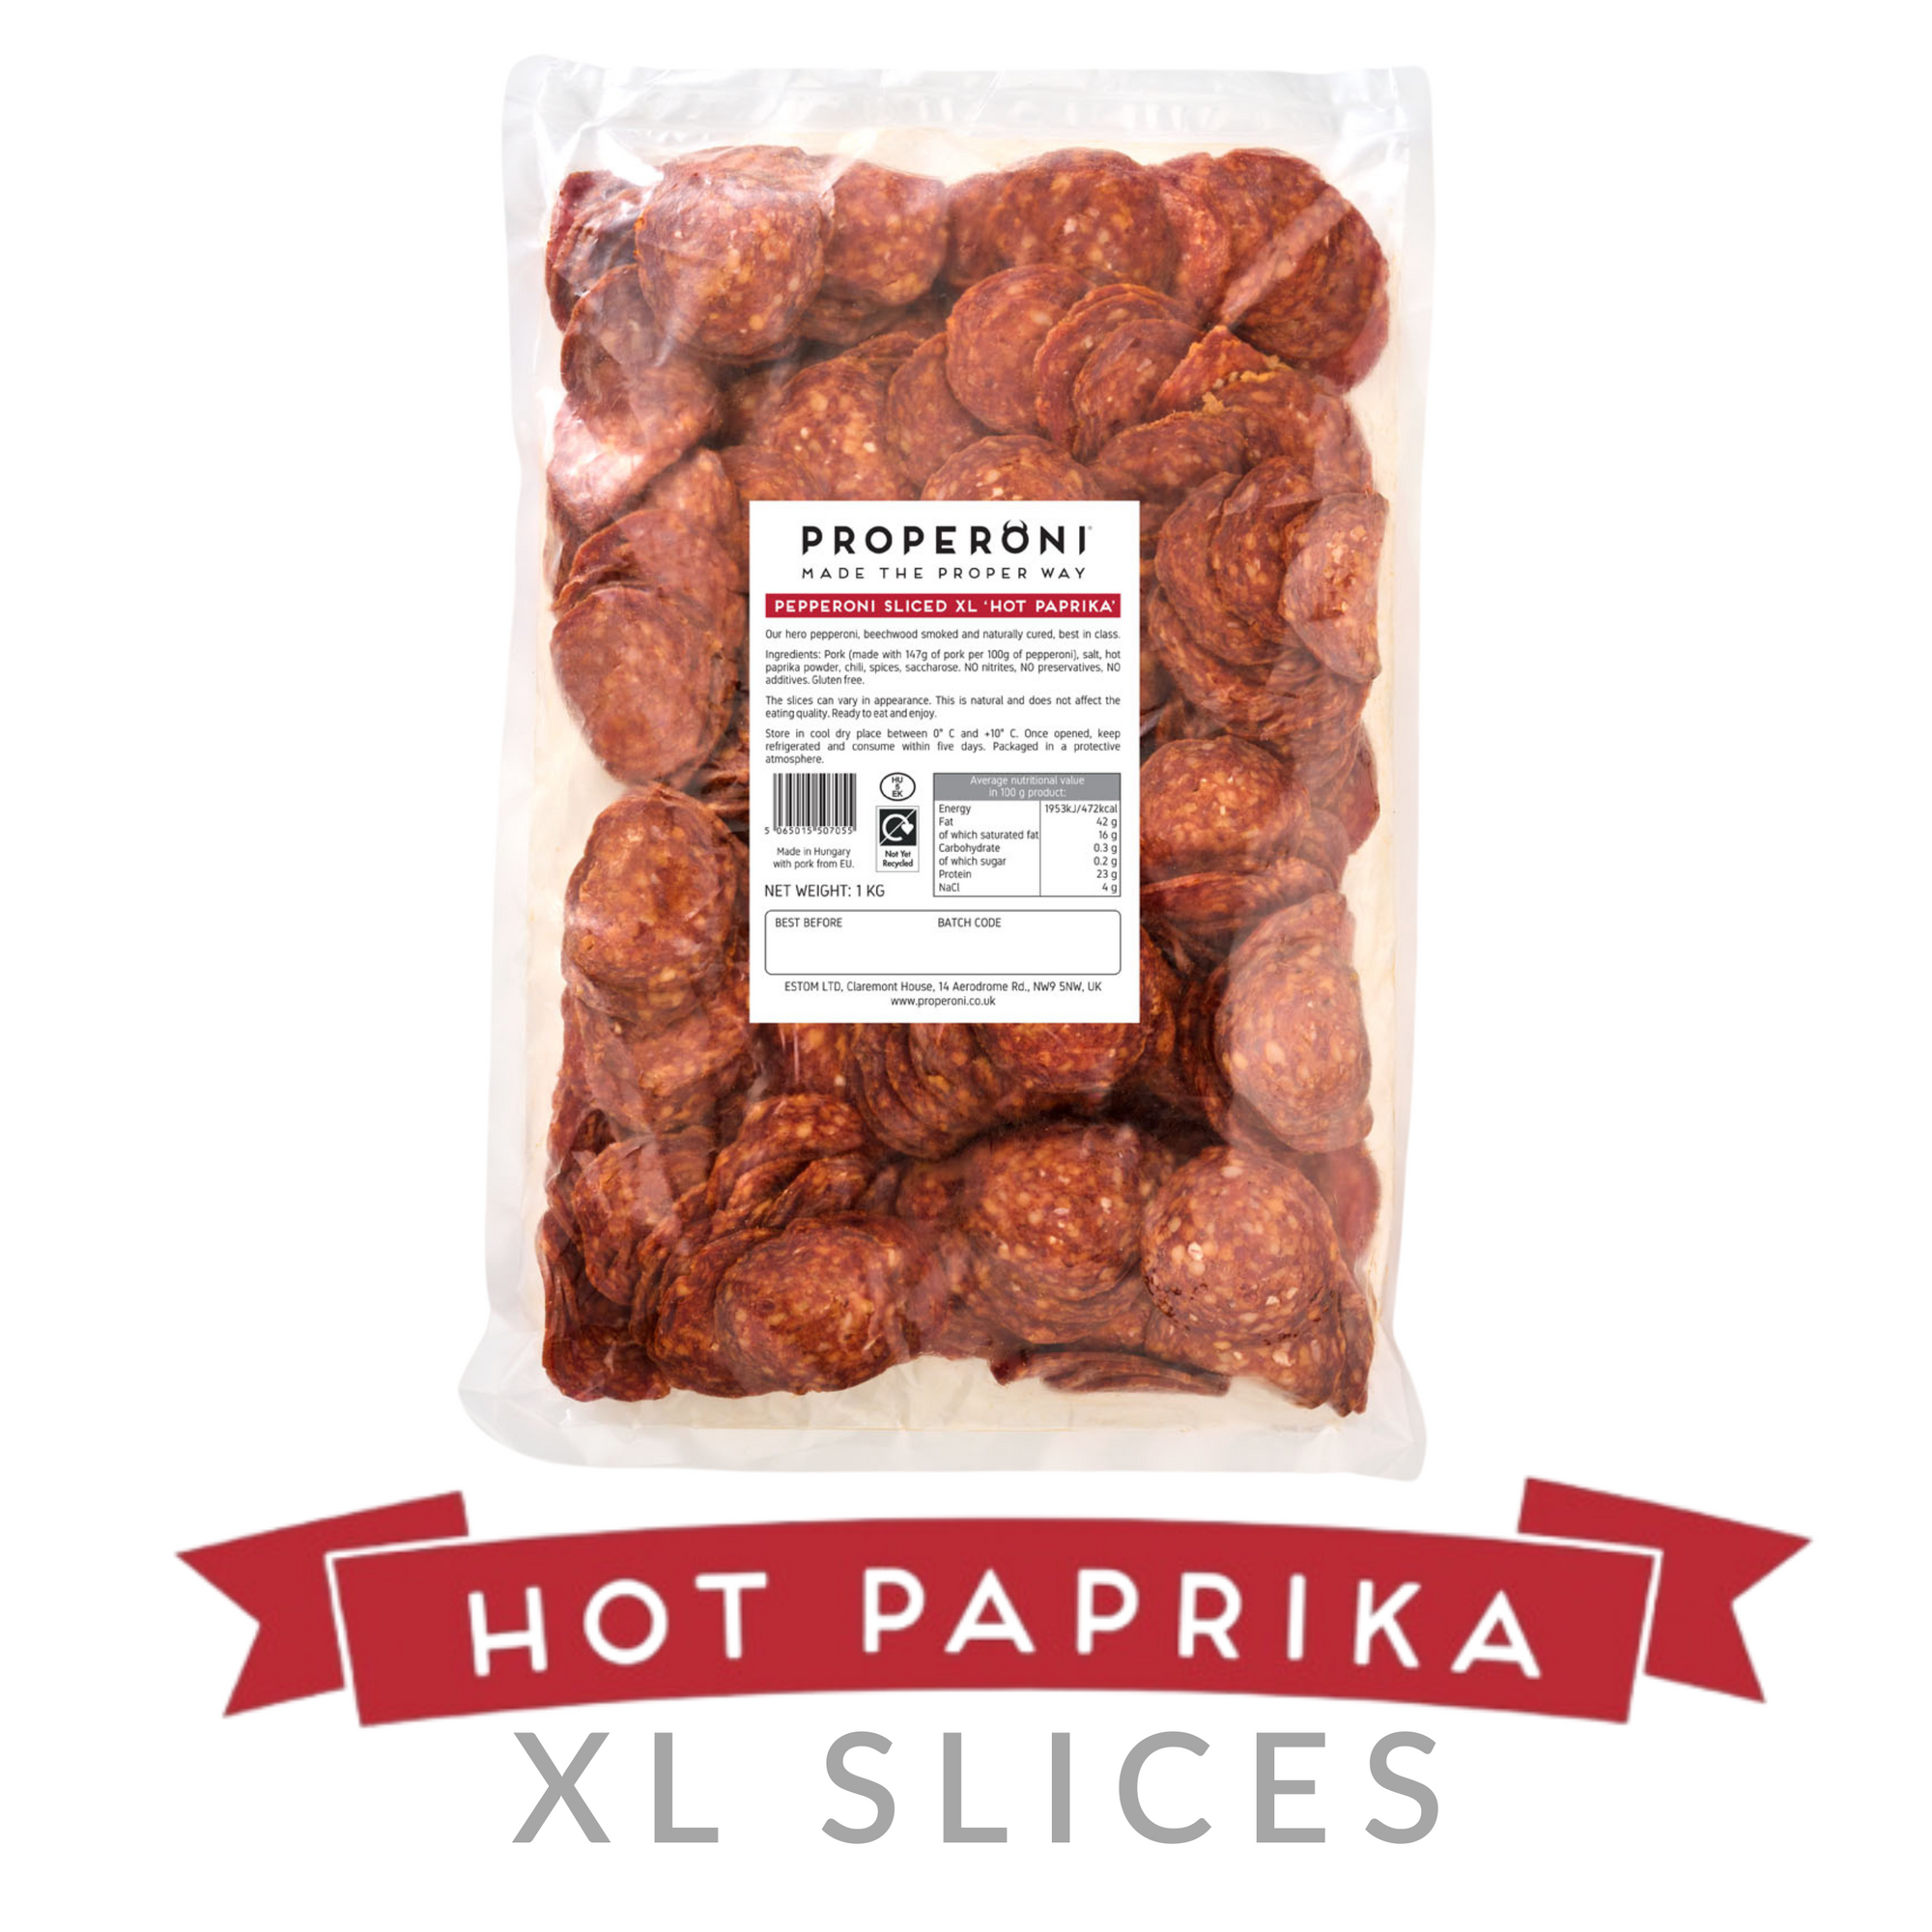 PROPERONI 'Hot Paprika' XL Sliced Pepperoni Trade 1kg